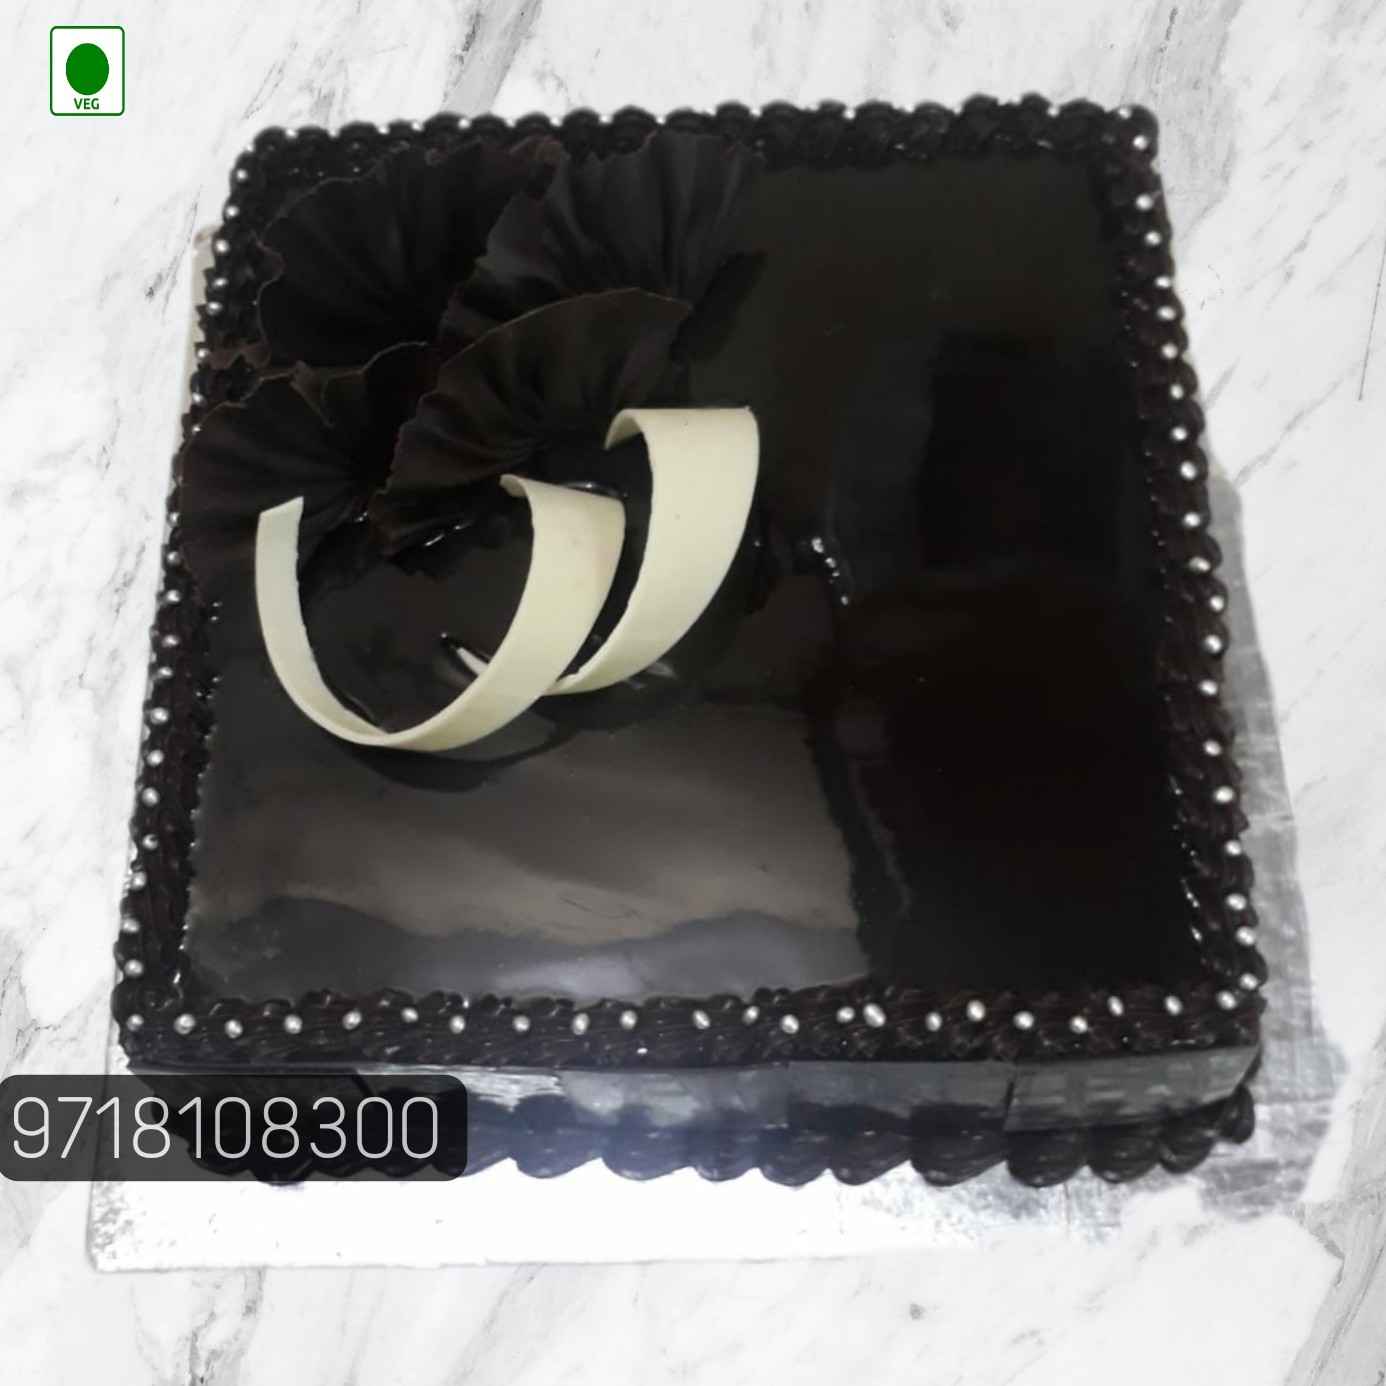 Square Shape Butter Cream Chocolate Happy Birthday Cake  Best Price   Giftacrossindia